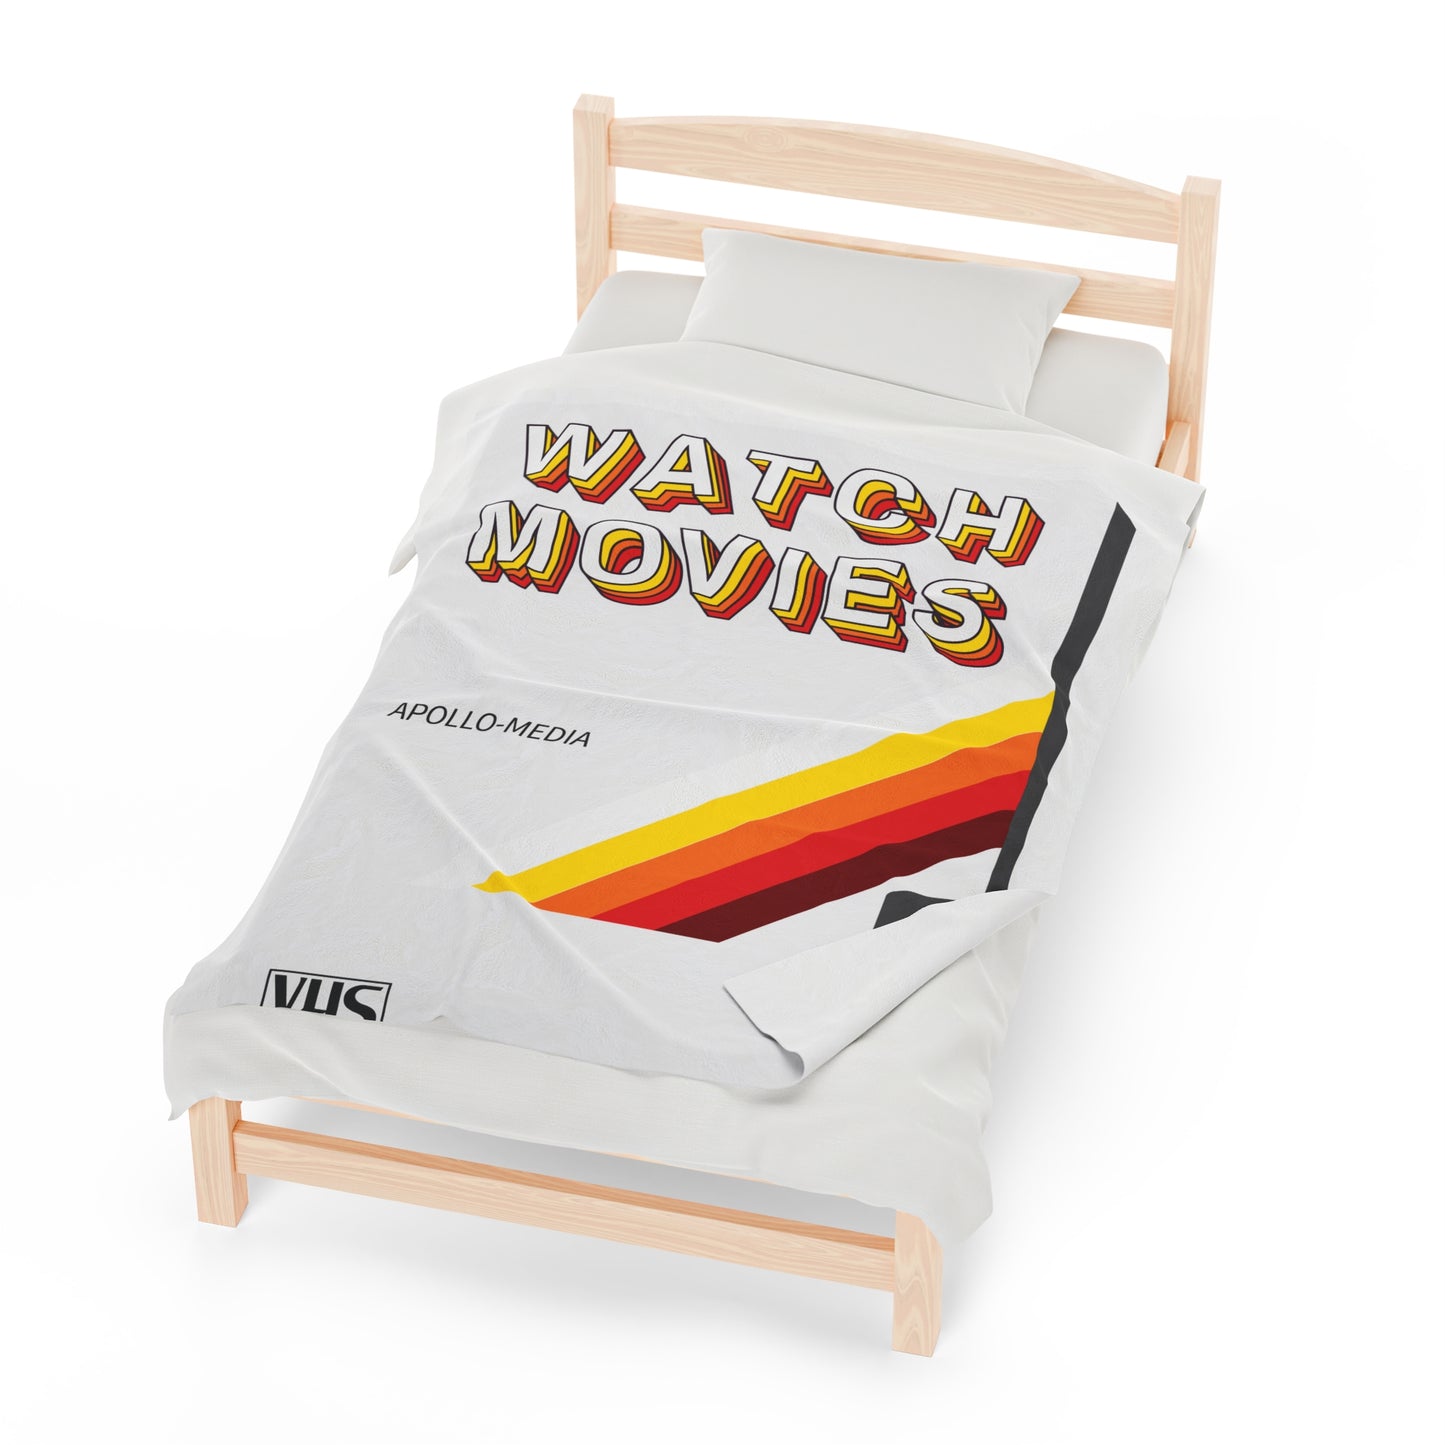 Apollo Watch Movies VHS Velveteen Plush Blanket